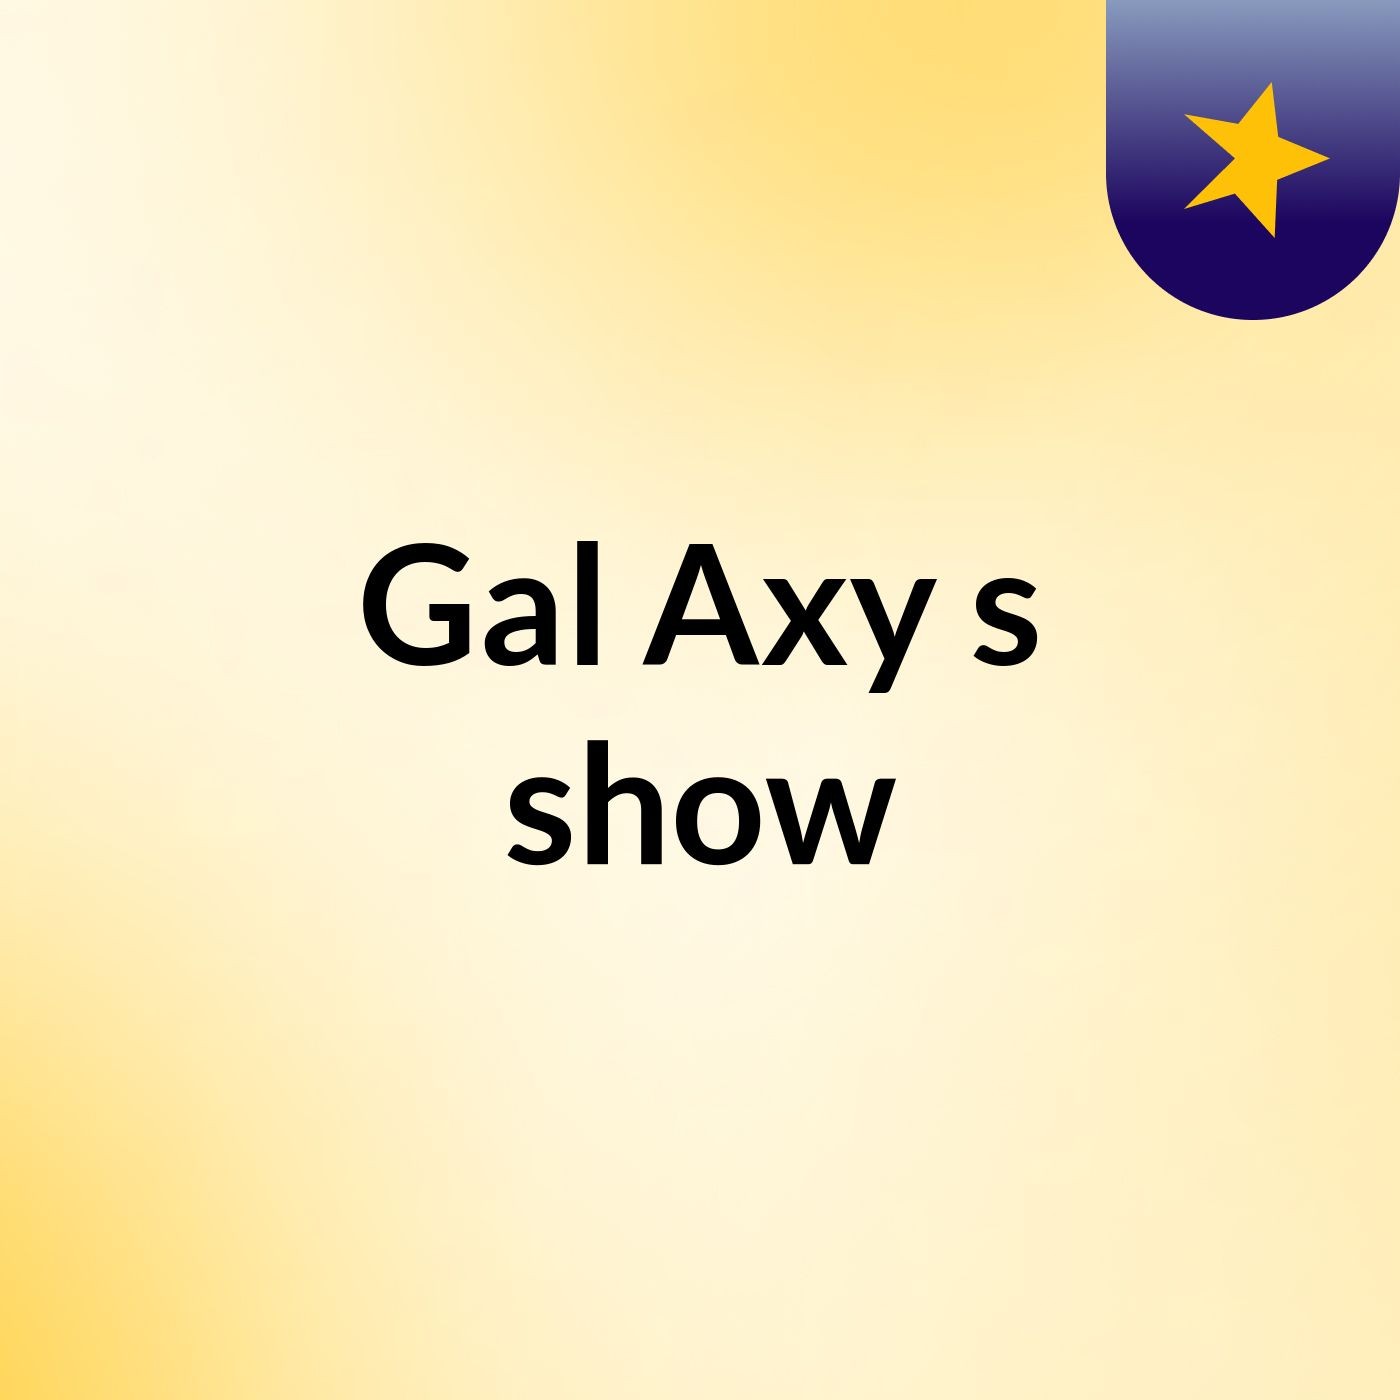 Gal Axy's show